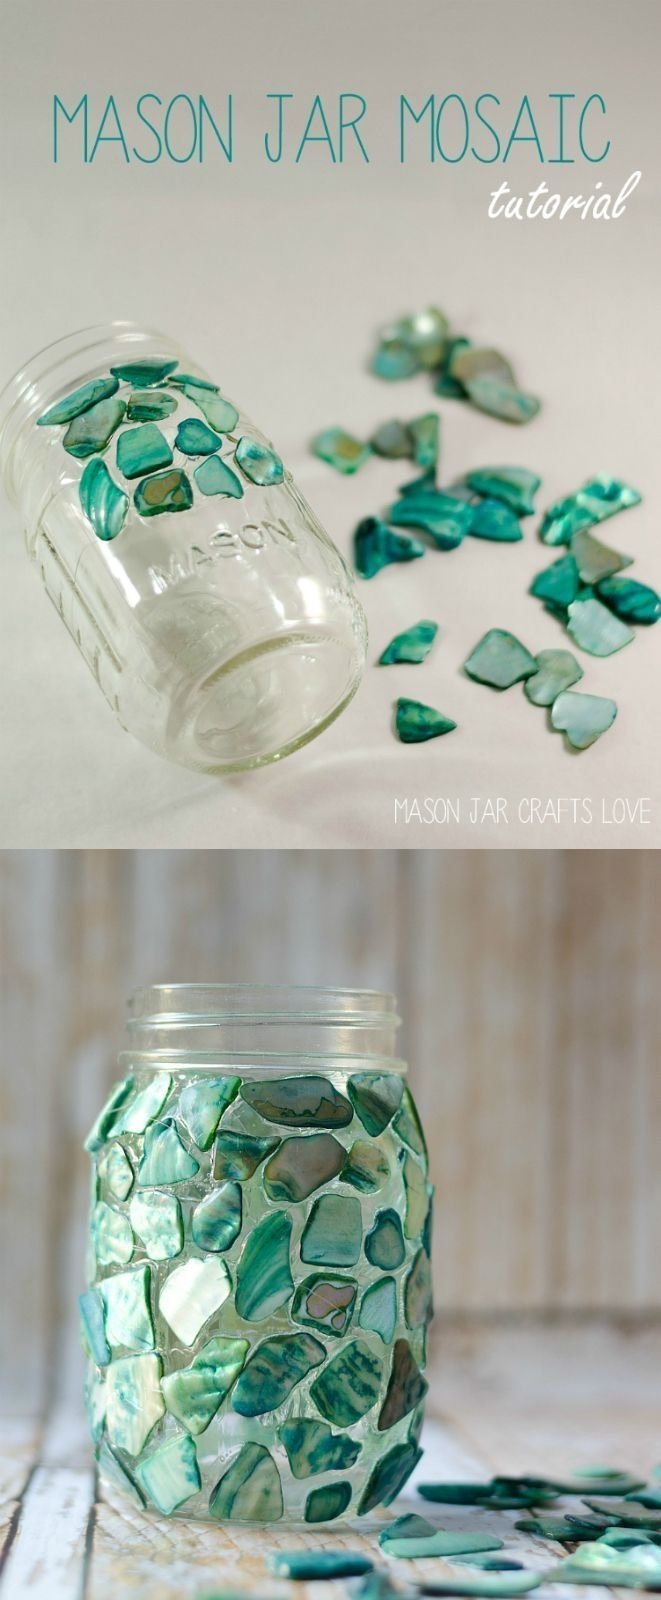 10 Great Craft Ideas For Mason Jars diy crafts mason jar craft ideas mason jar mosaic mosaic craft 1 2022